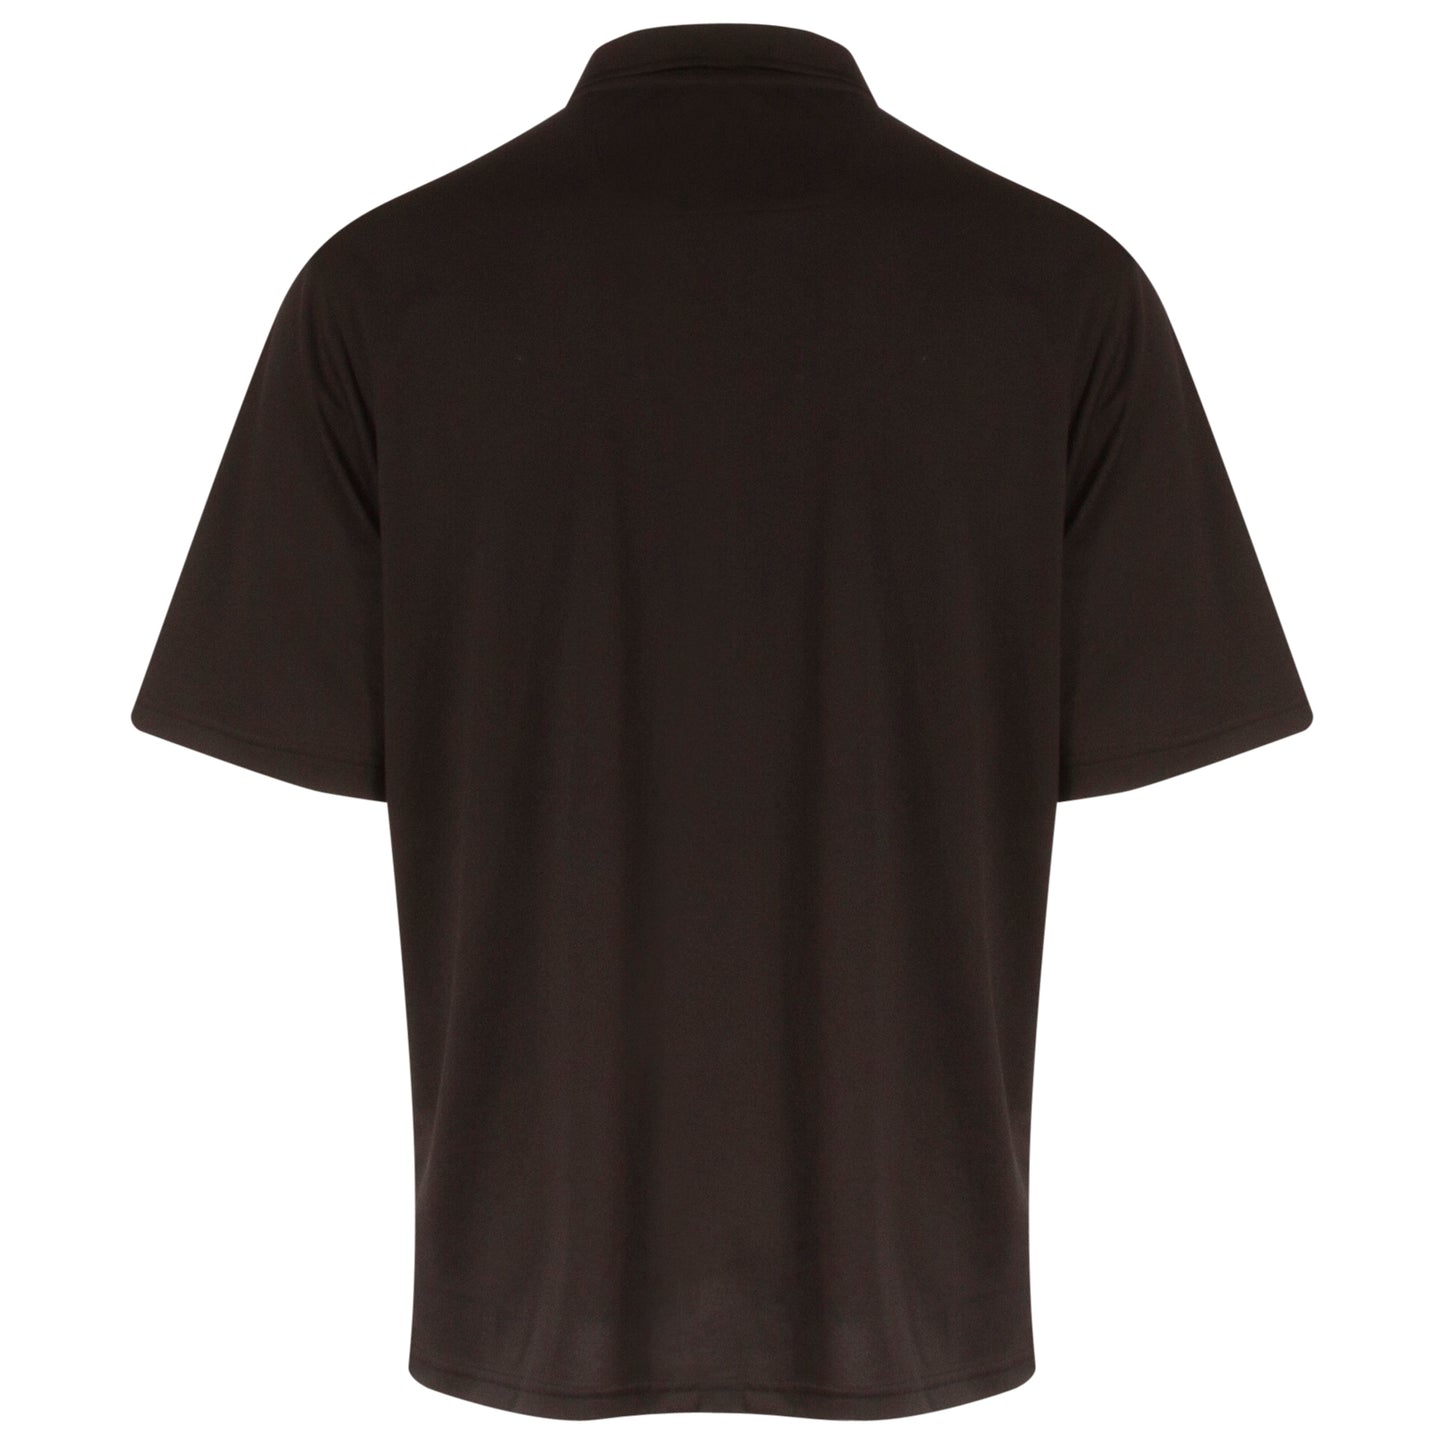 Chicago Bulls Men's Black Pique Xtra Lite Primary Logo Polo Shirt